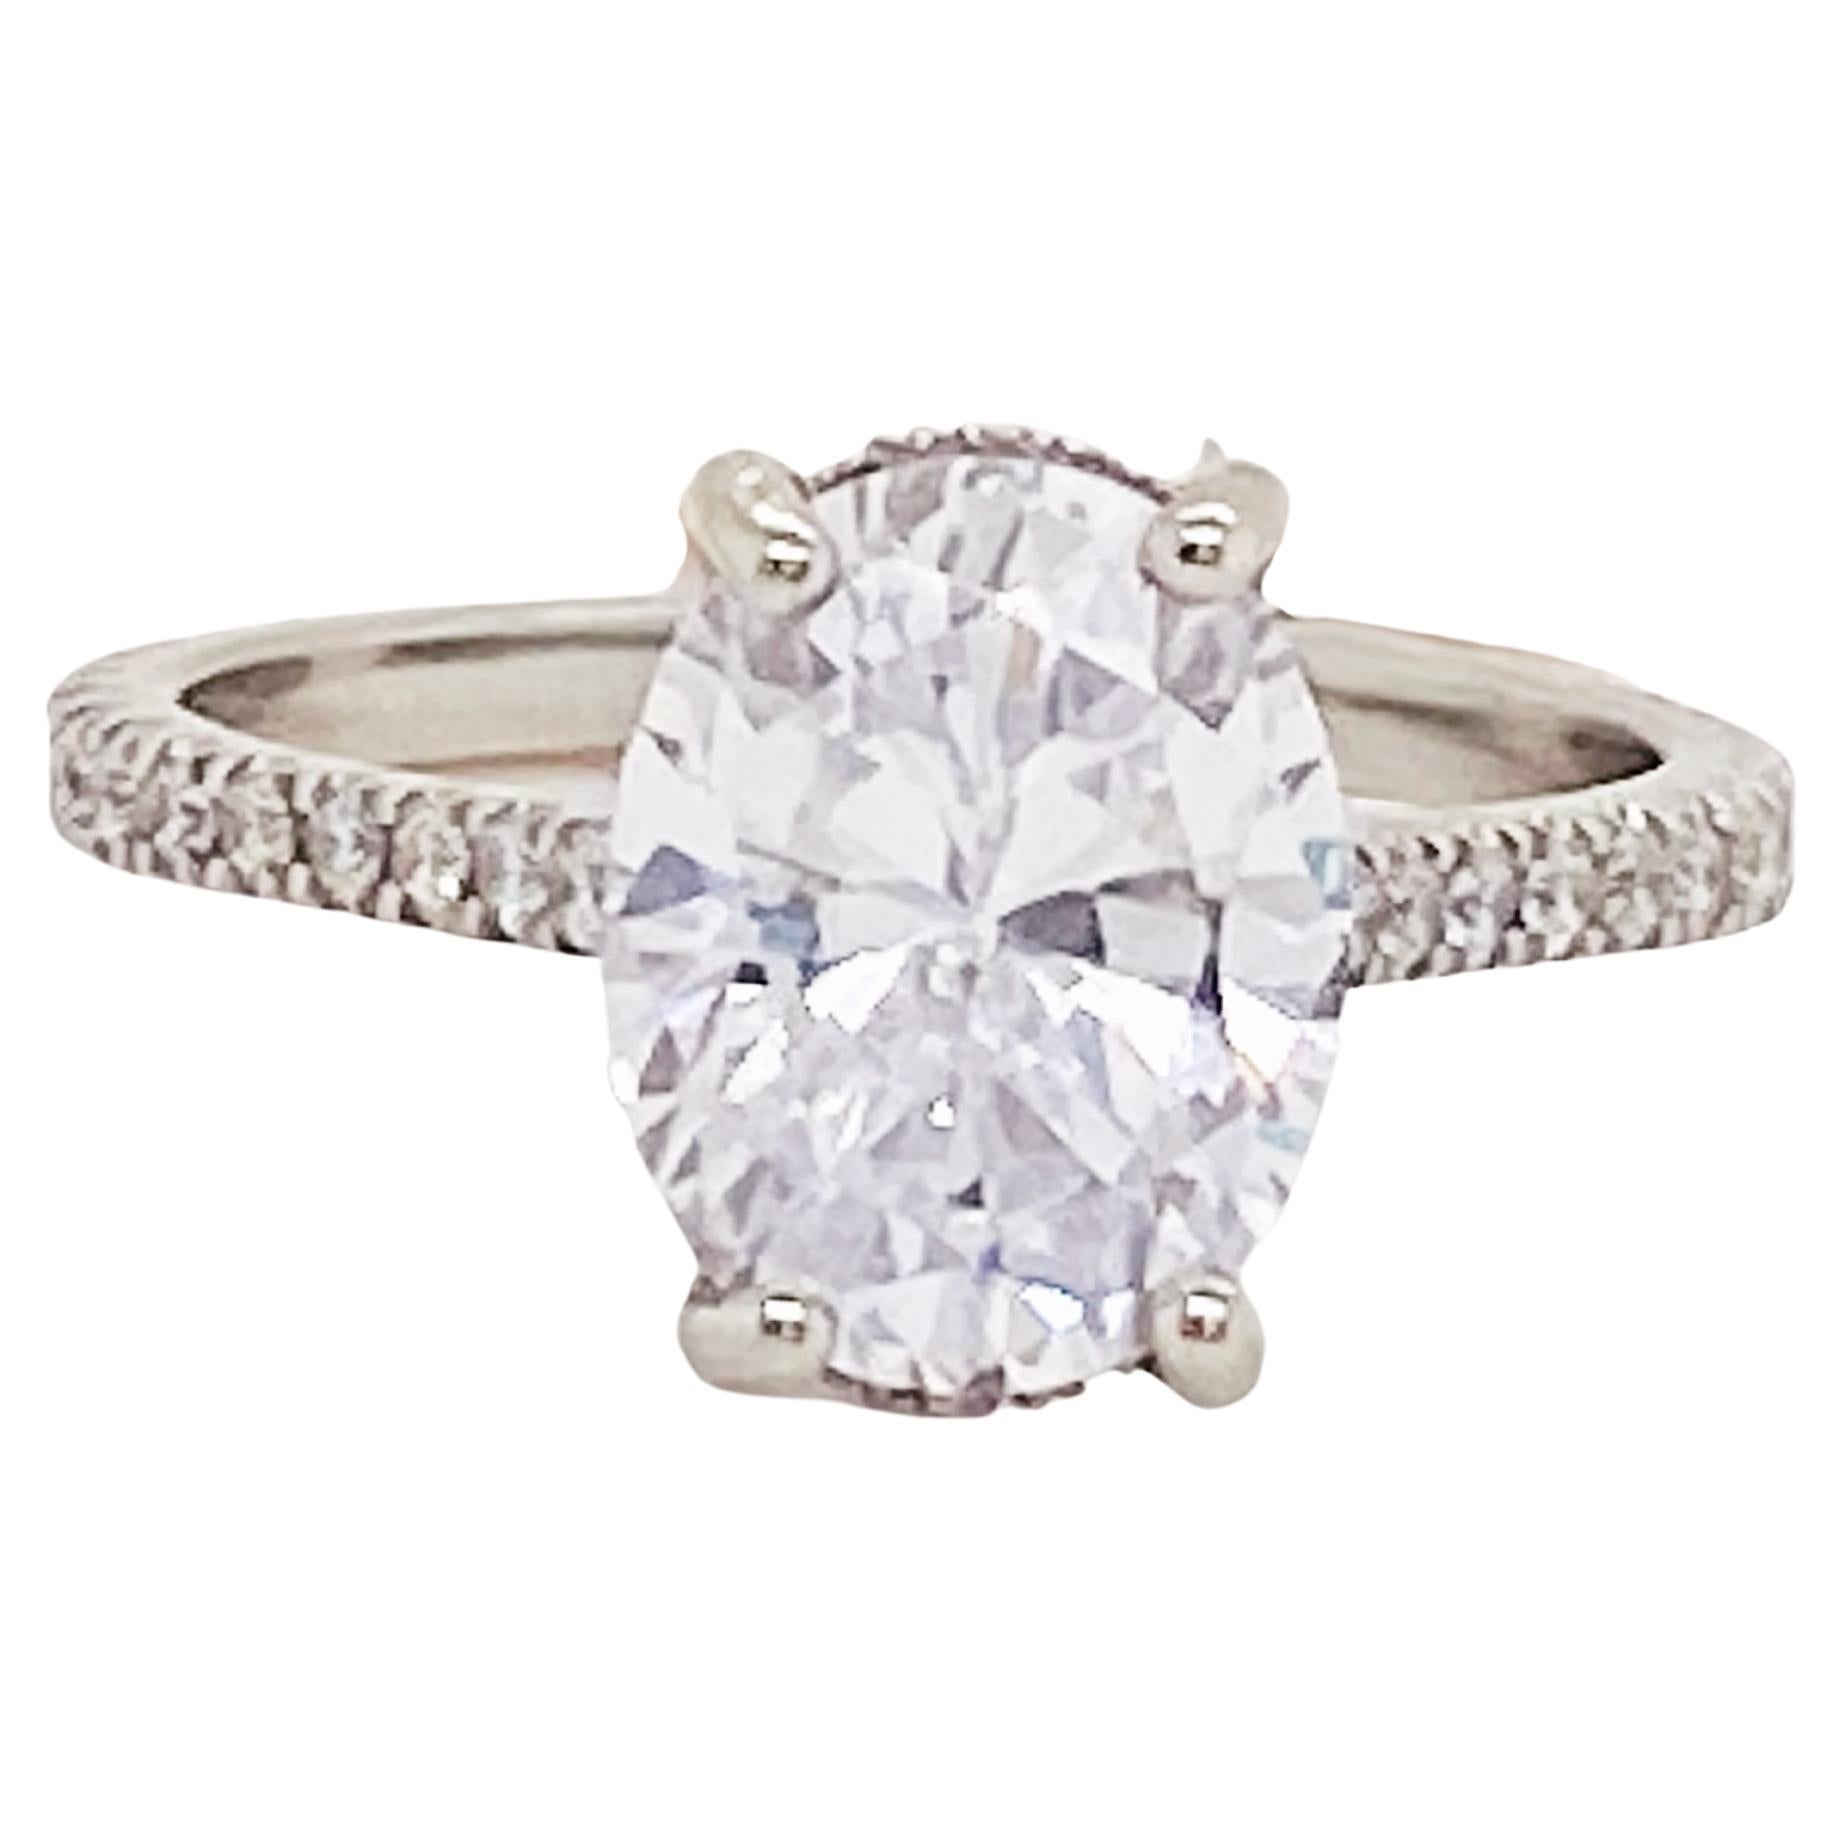 For Sale:  3.50 Carat Oval Diamond Engagement Ring Diamonds on Band 19 Karat Gold